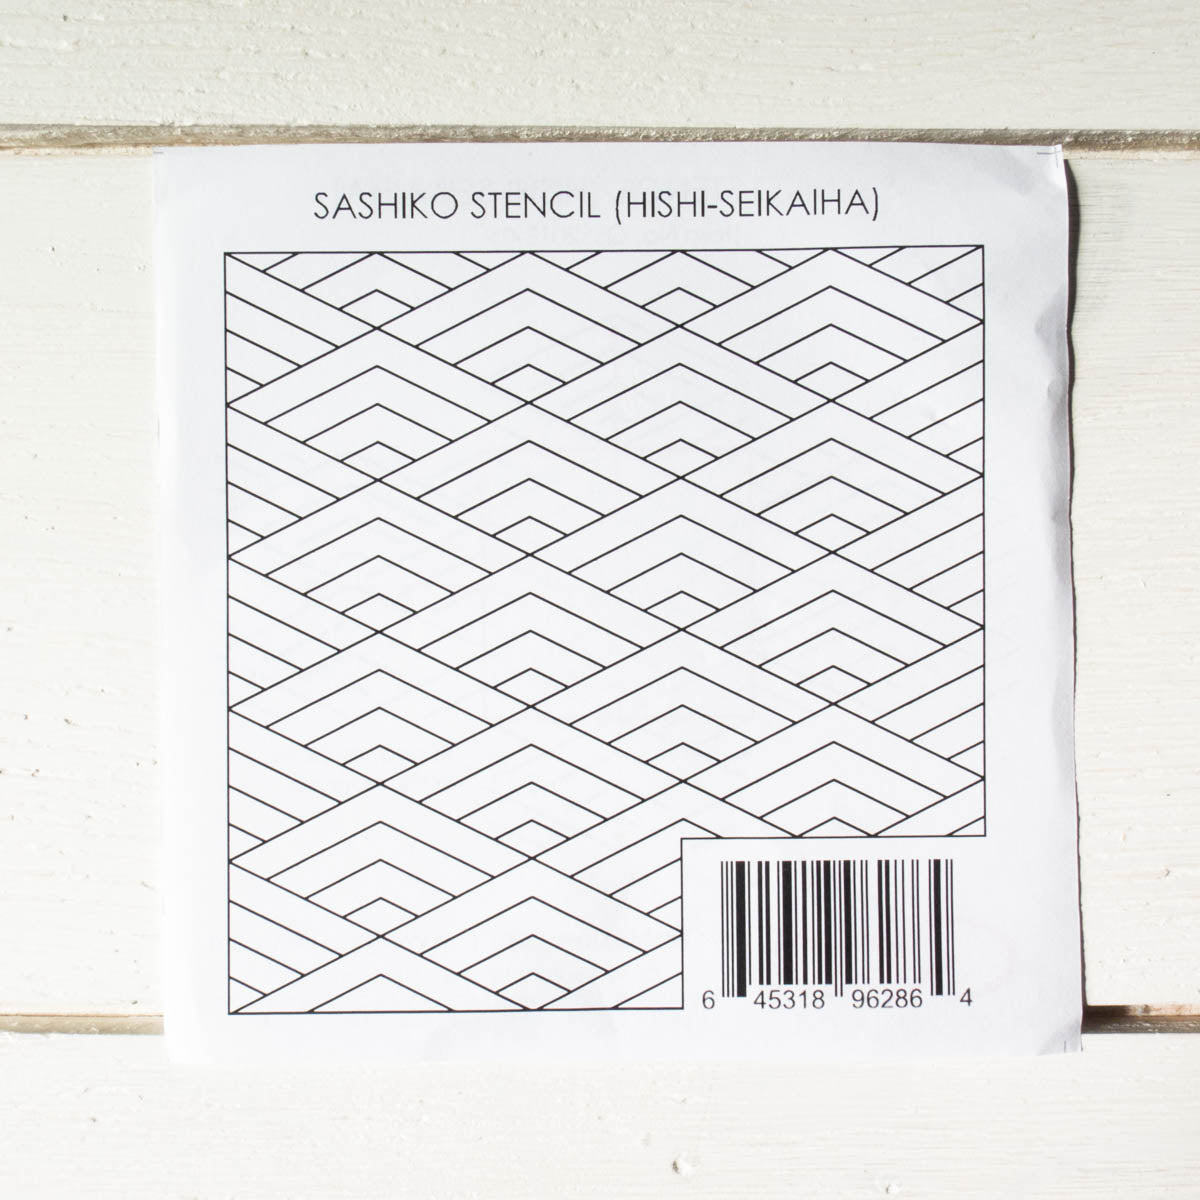 Sashiko Stencil - Sanju-Hishi-Tsunagi